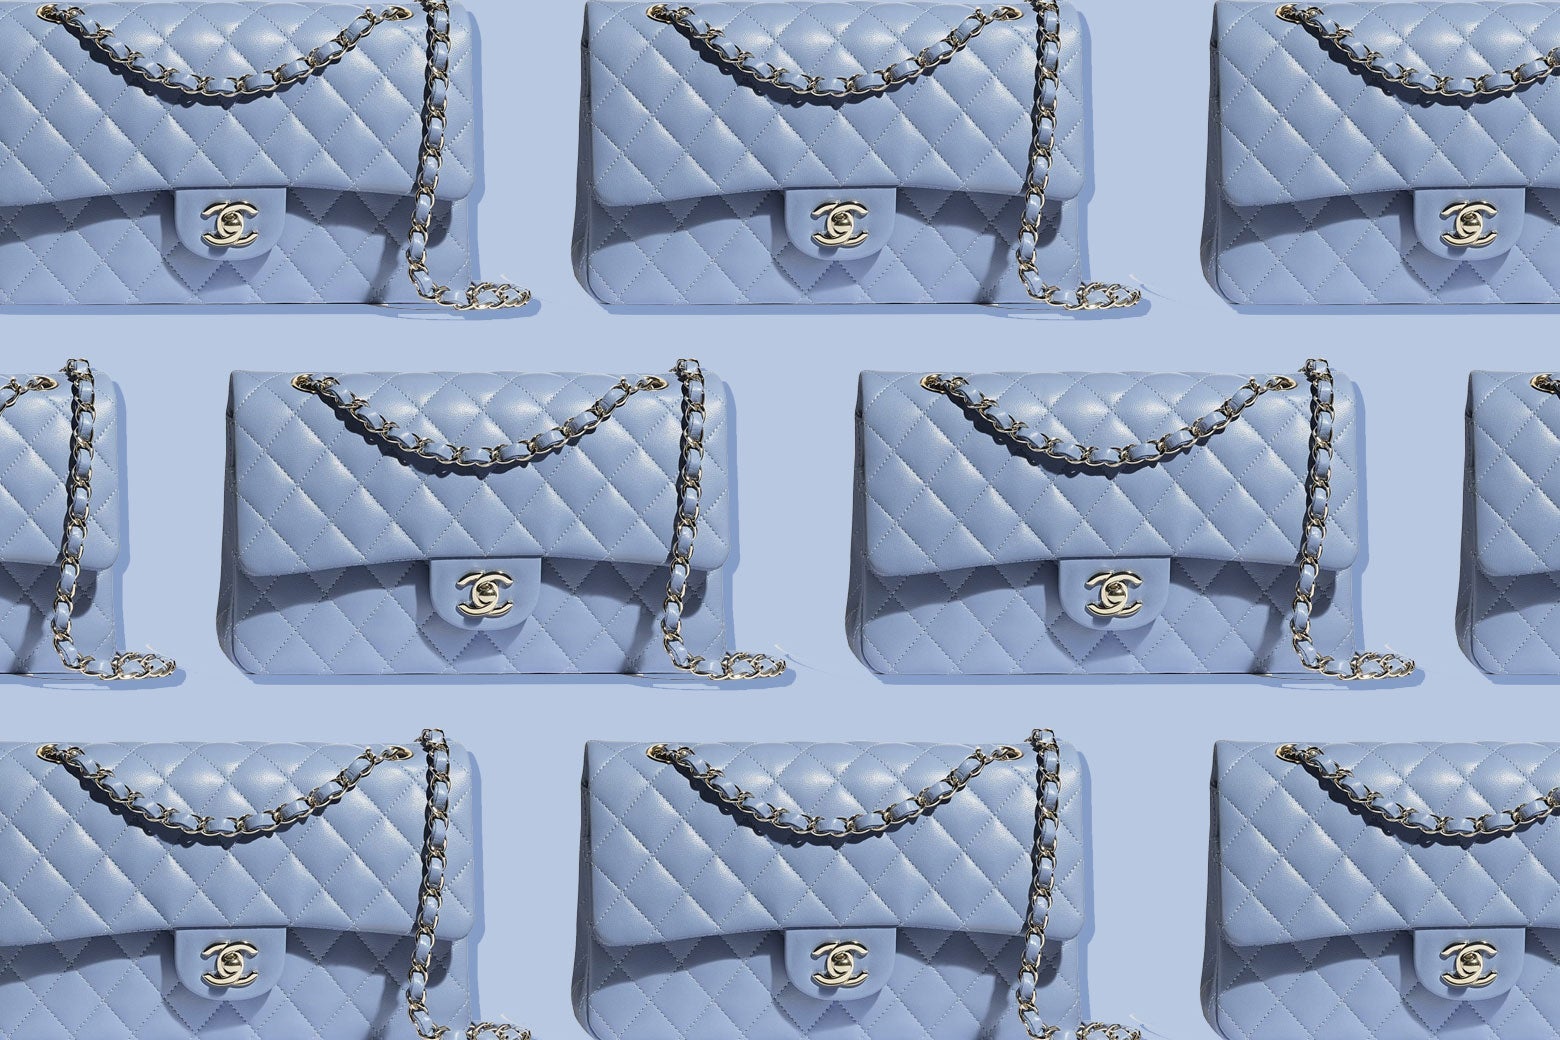 Periwinkle Chanel handbags.